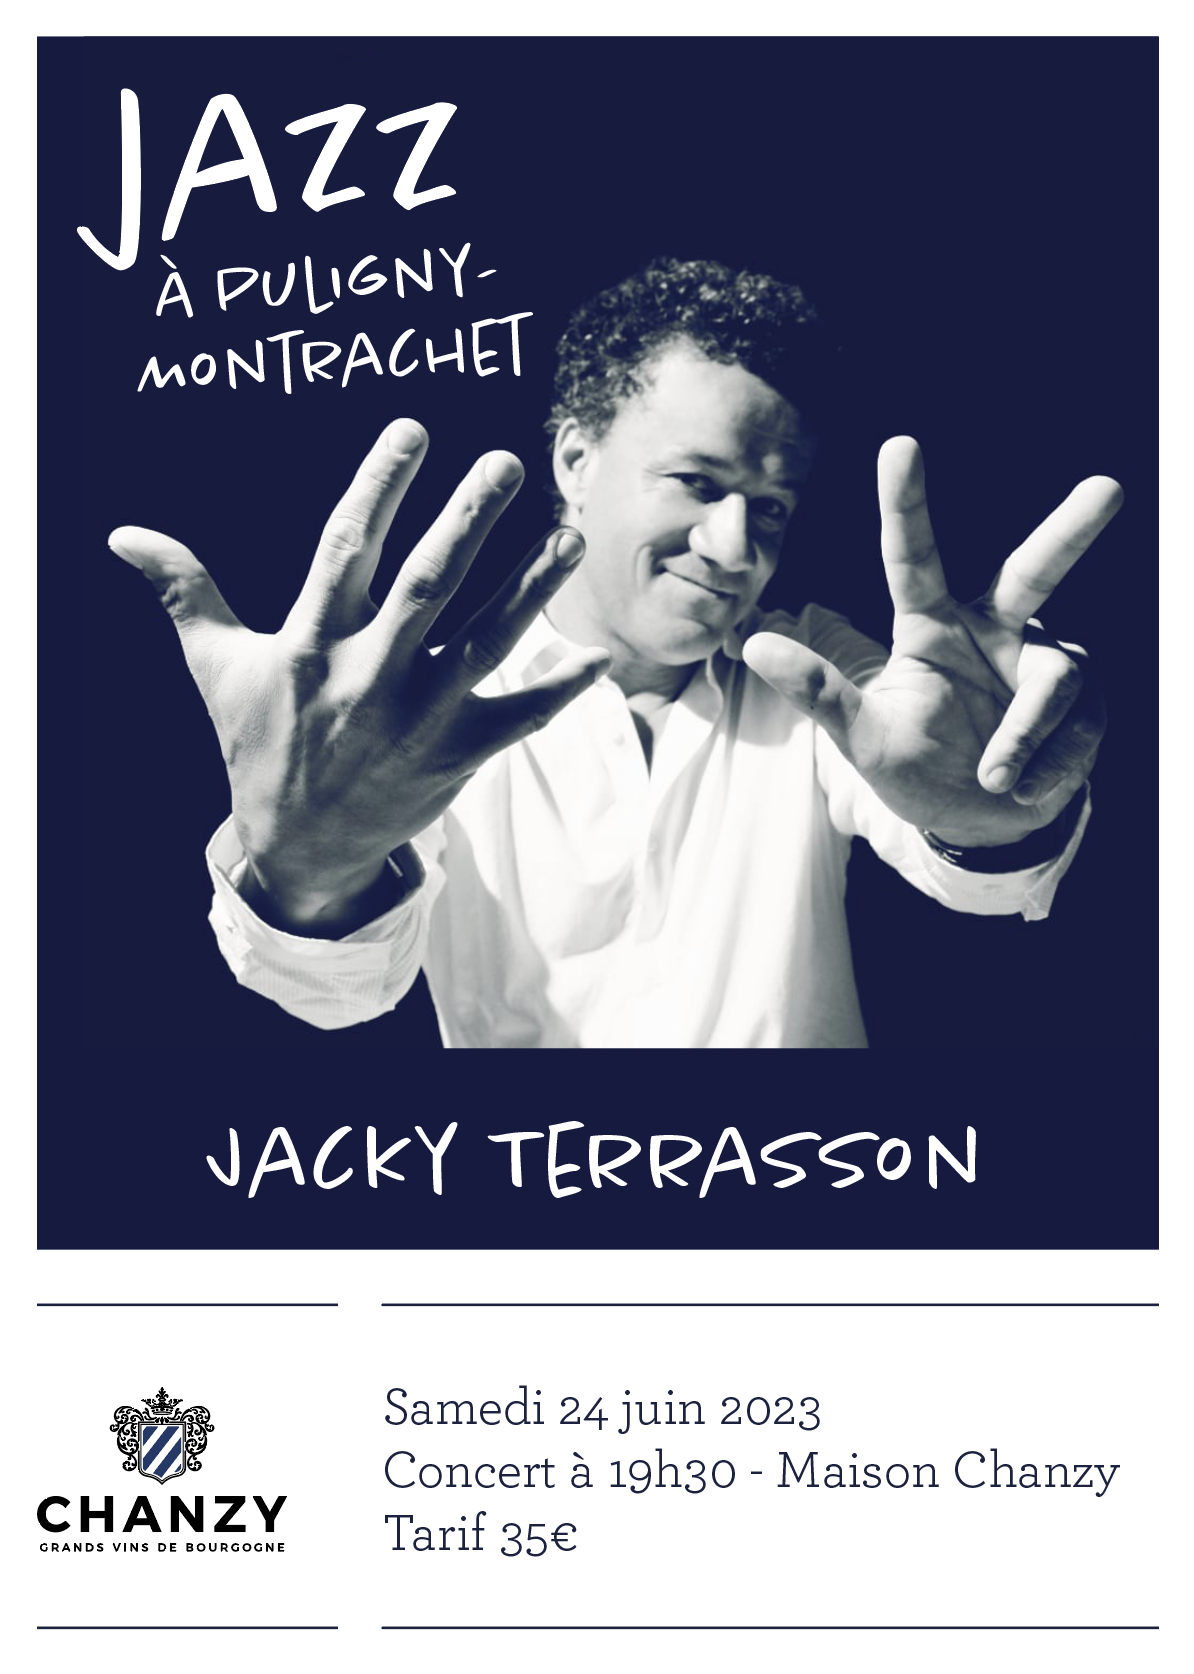 Jacky Terrasson at Maison Chanzy - Jazz in Puligny 